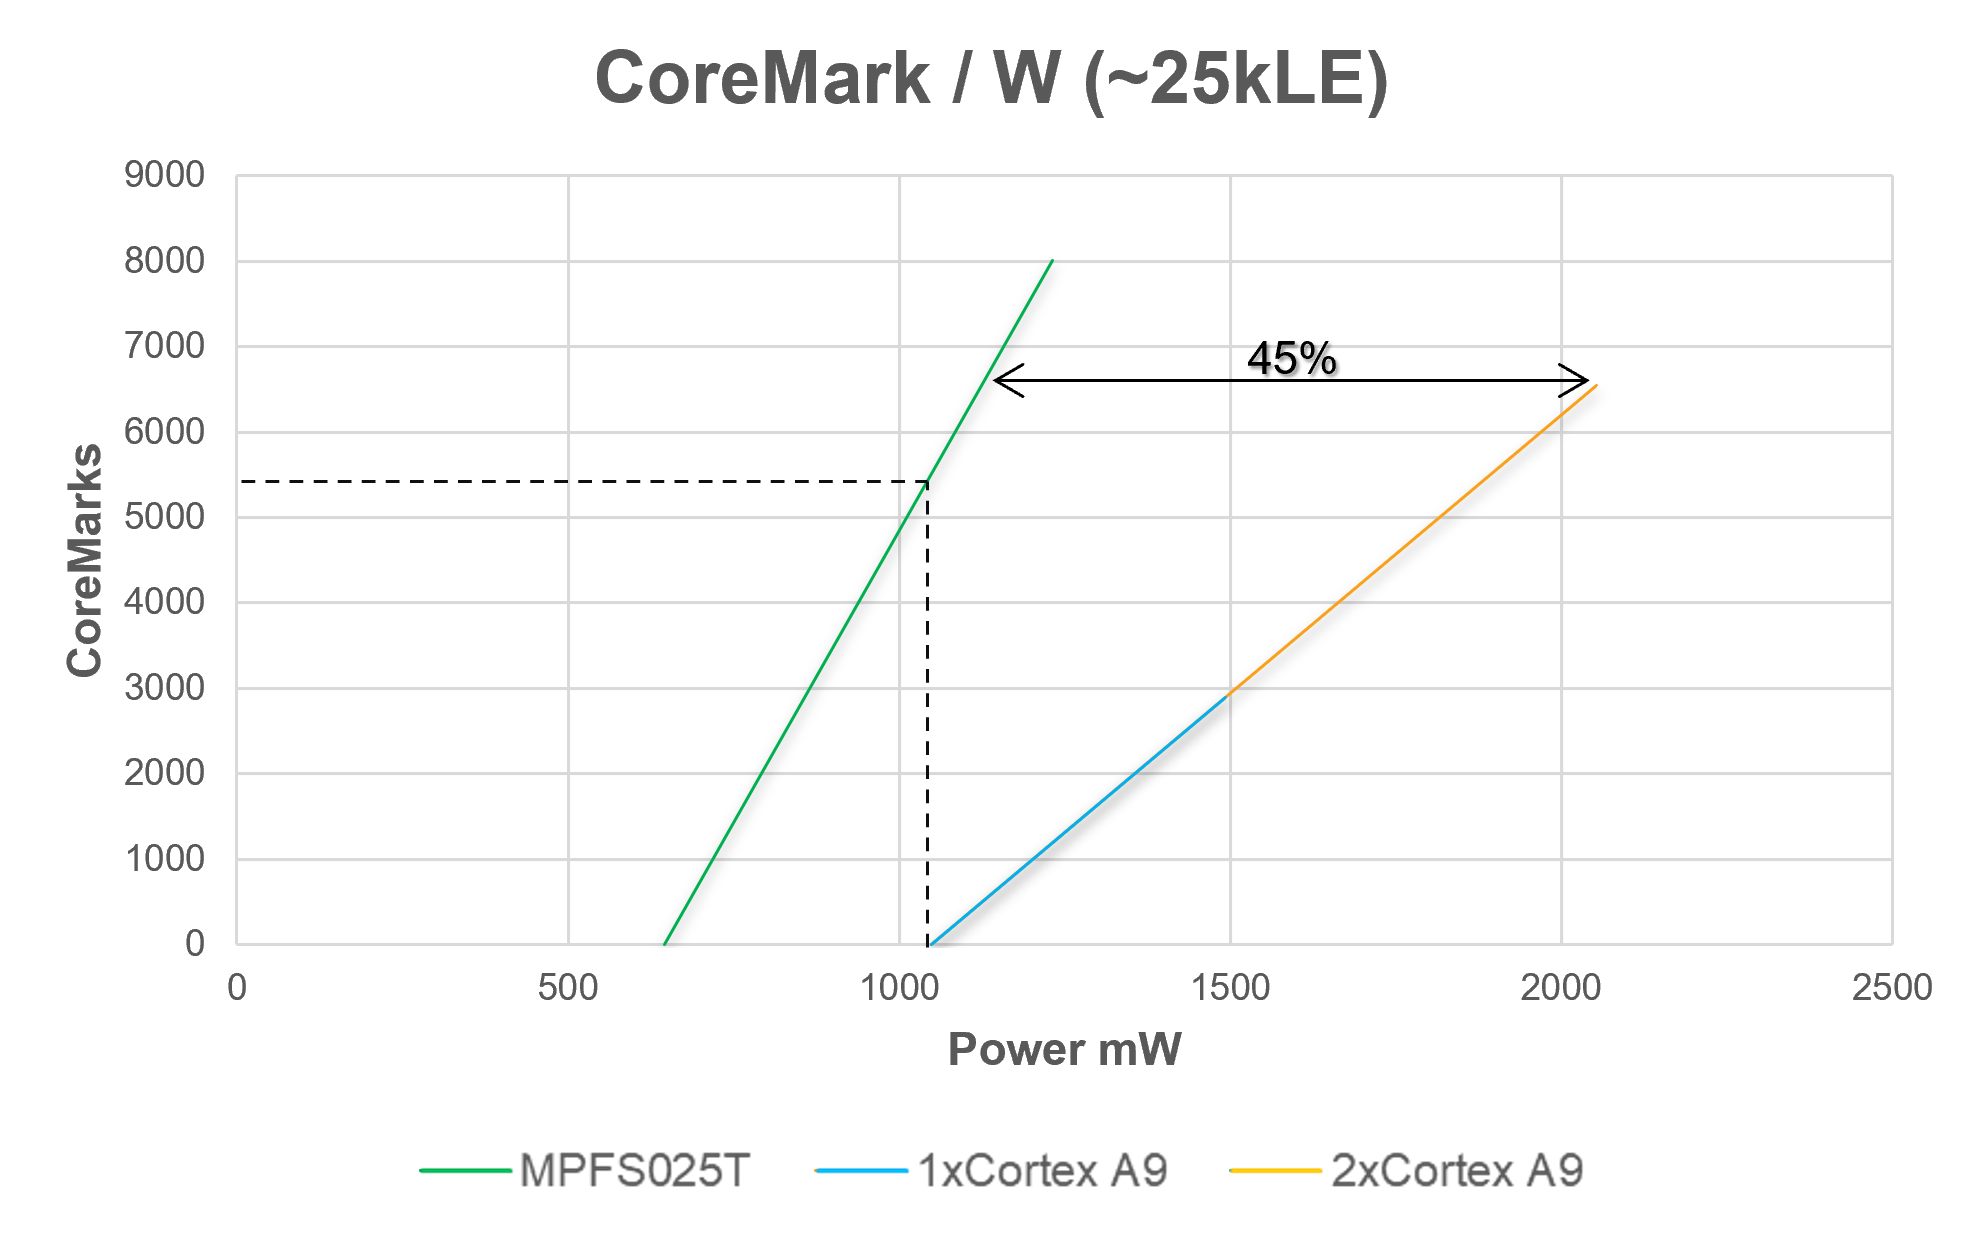 CoreMark per watt for 25kLE